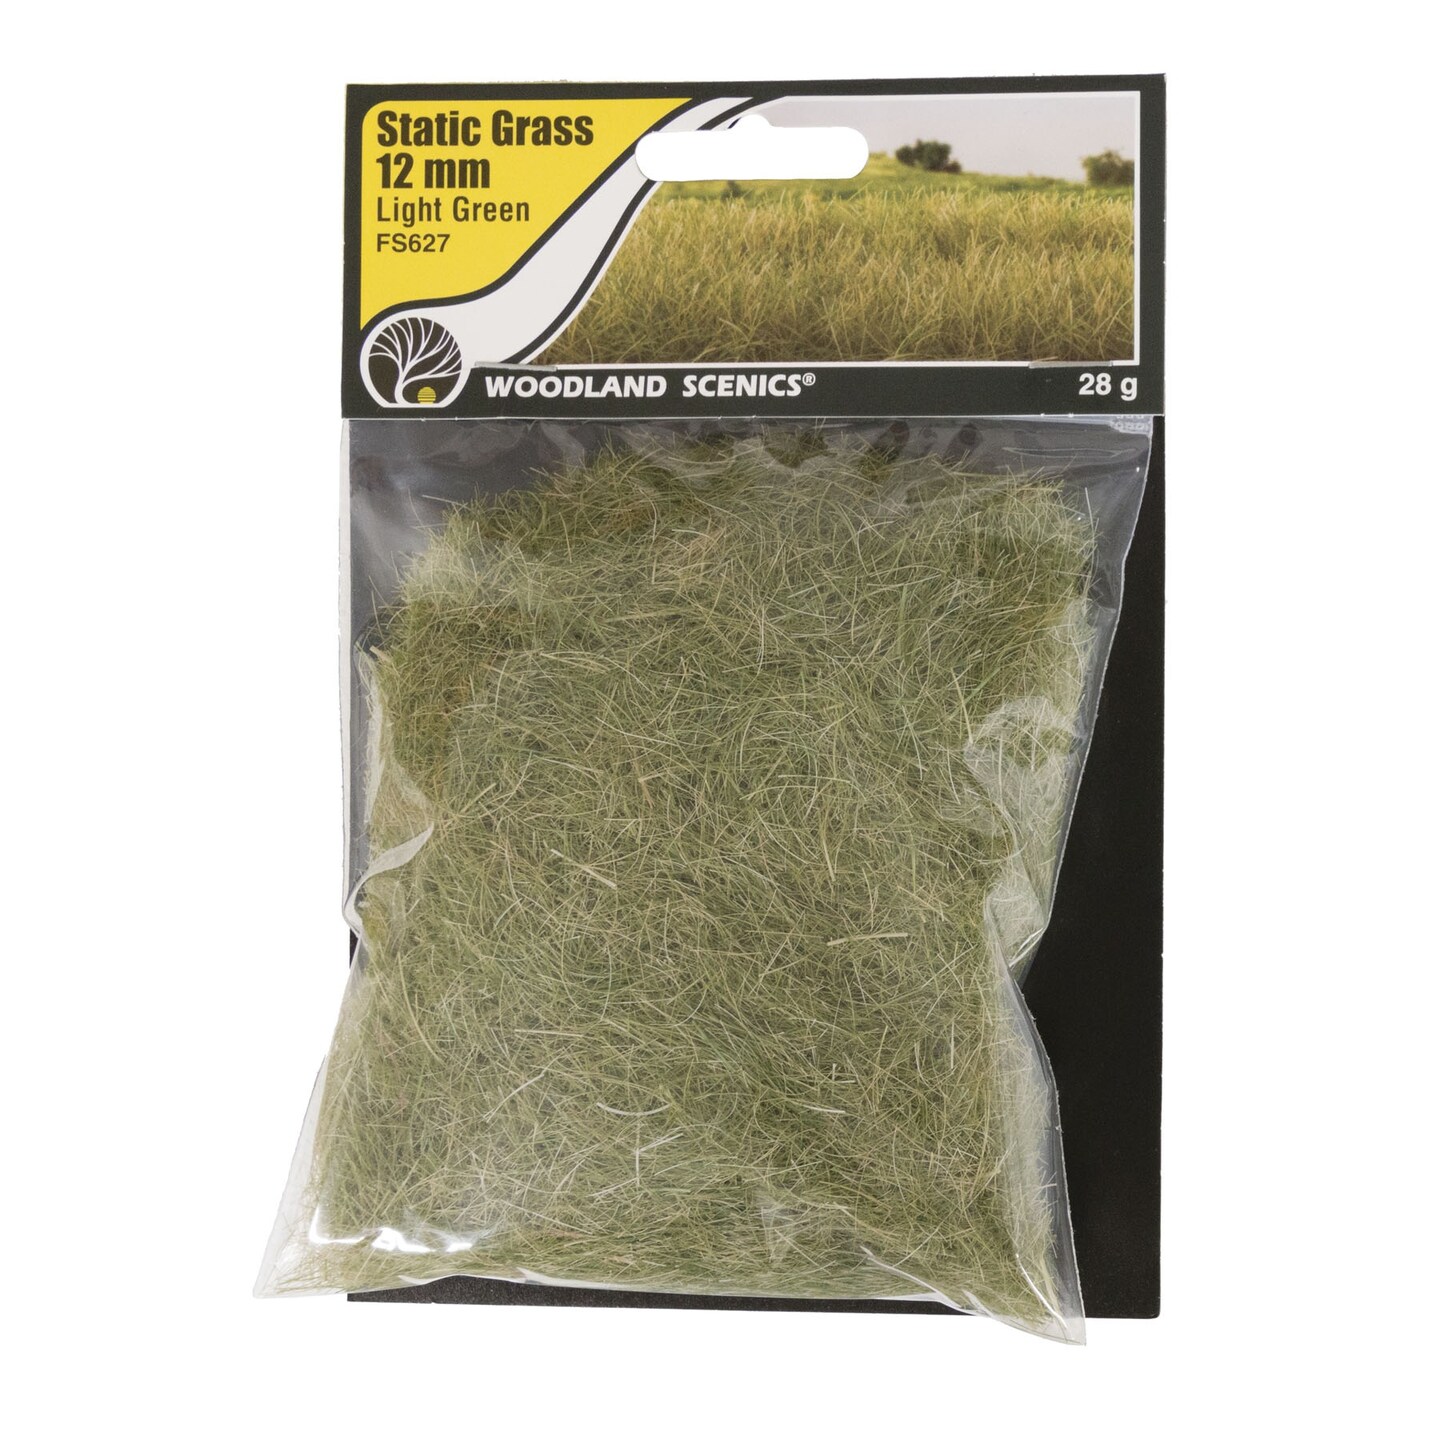 Wooland Scenics Static Grass 12mm-Light Green